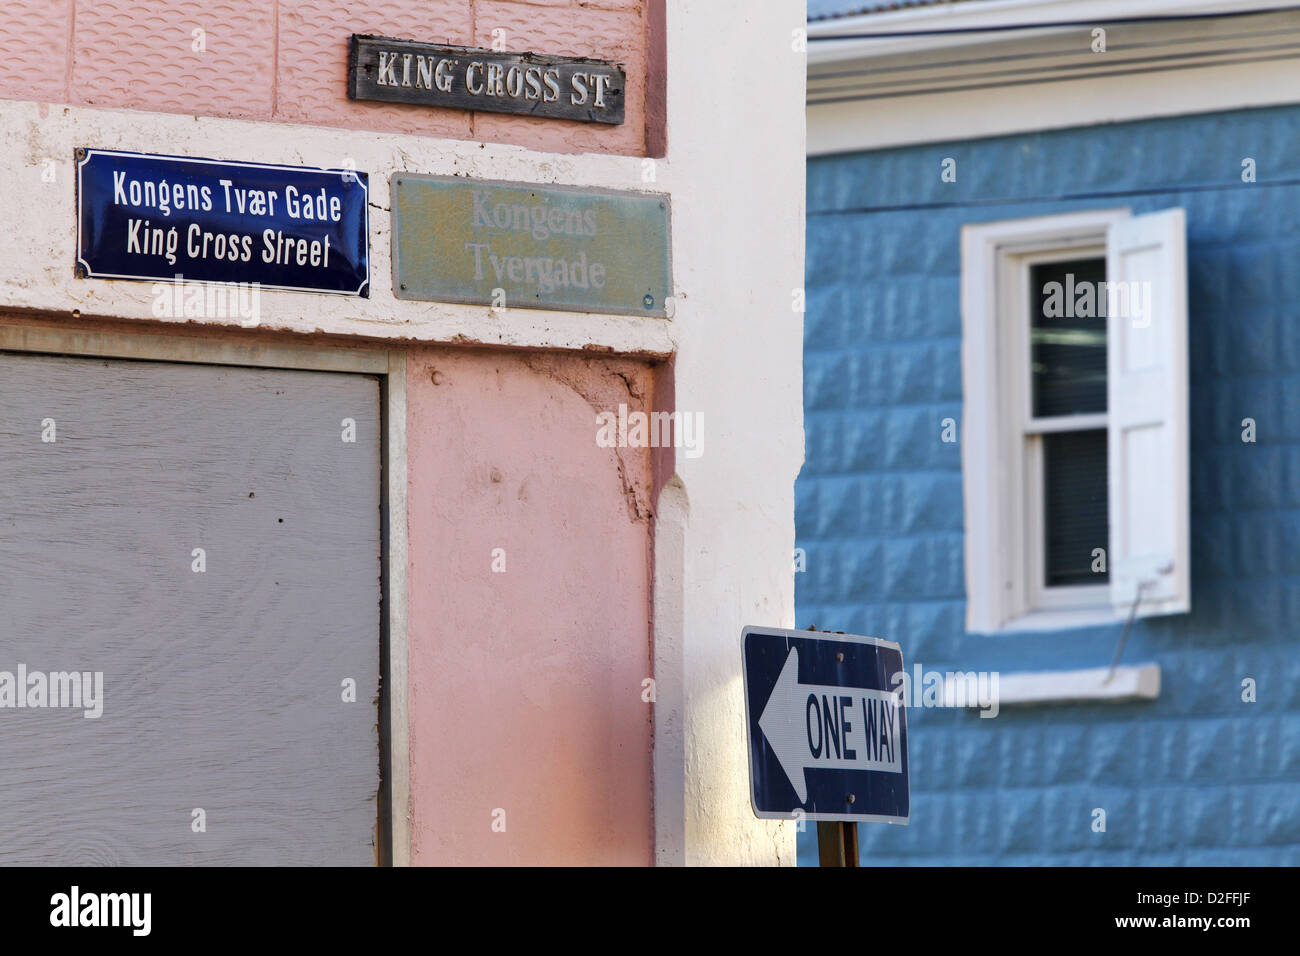 Street Signs, Kongens Tvær Gade / King Cross Street, Christiansted, St. Croix, US Virgin Islands, Caribbean Stock Photo